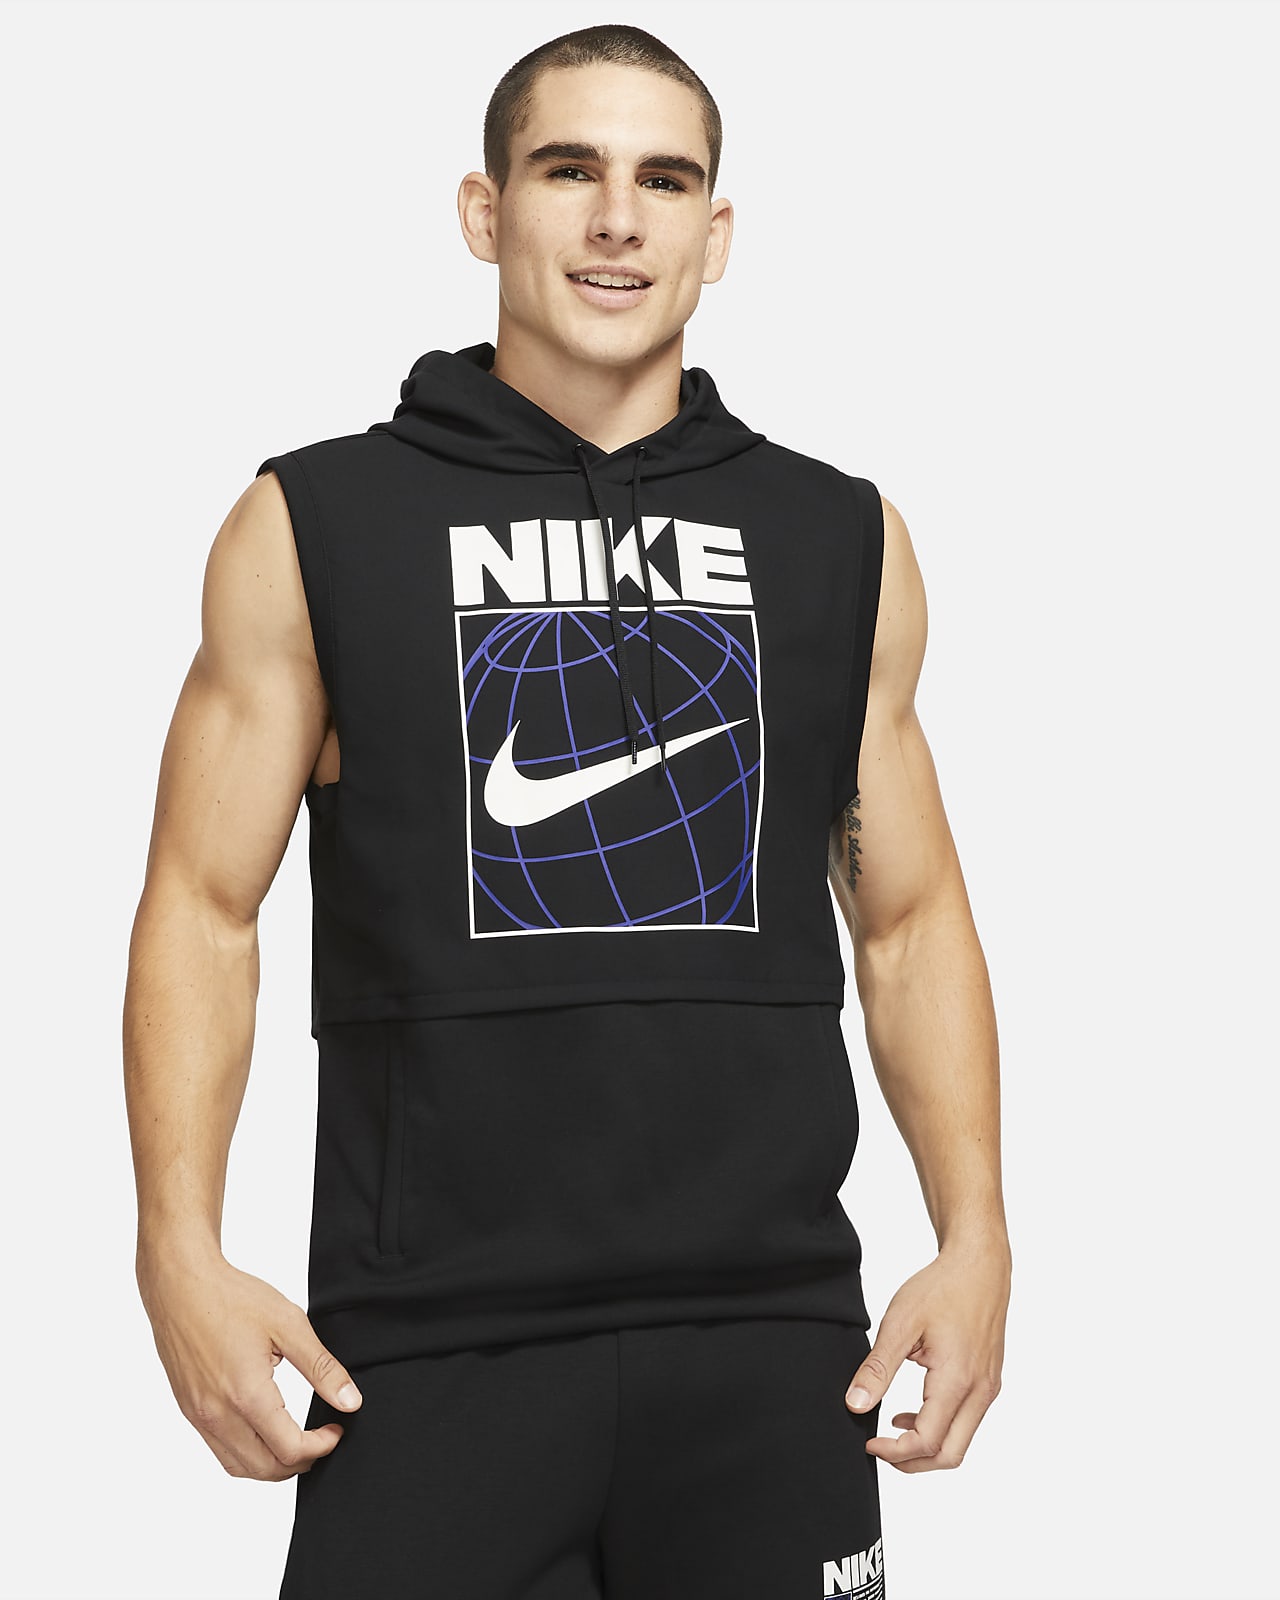 Nike Dri-FIT Men's Sleeveless Graphic 